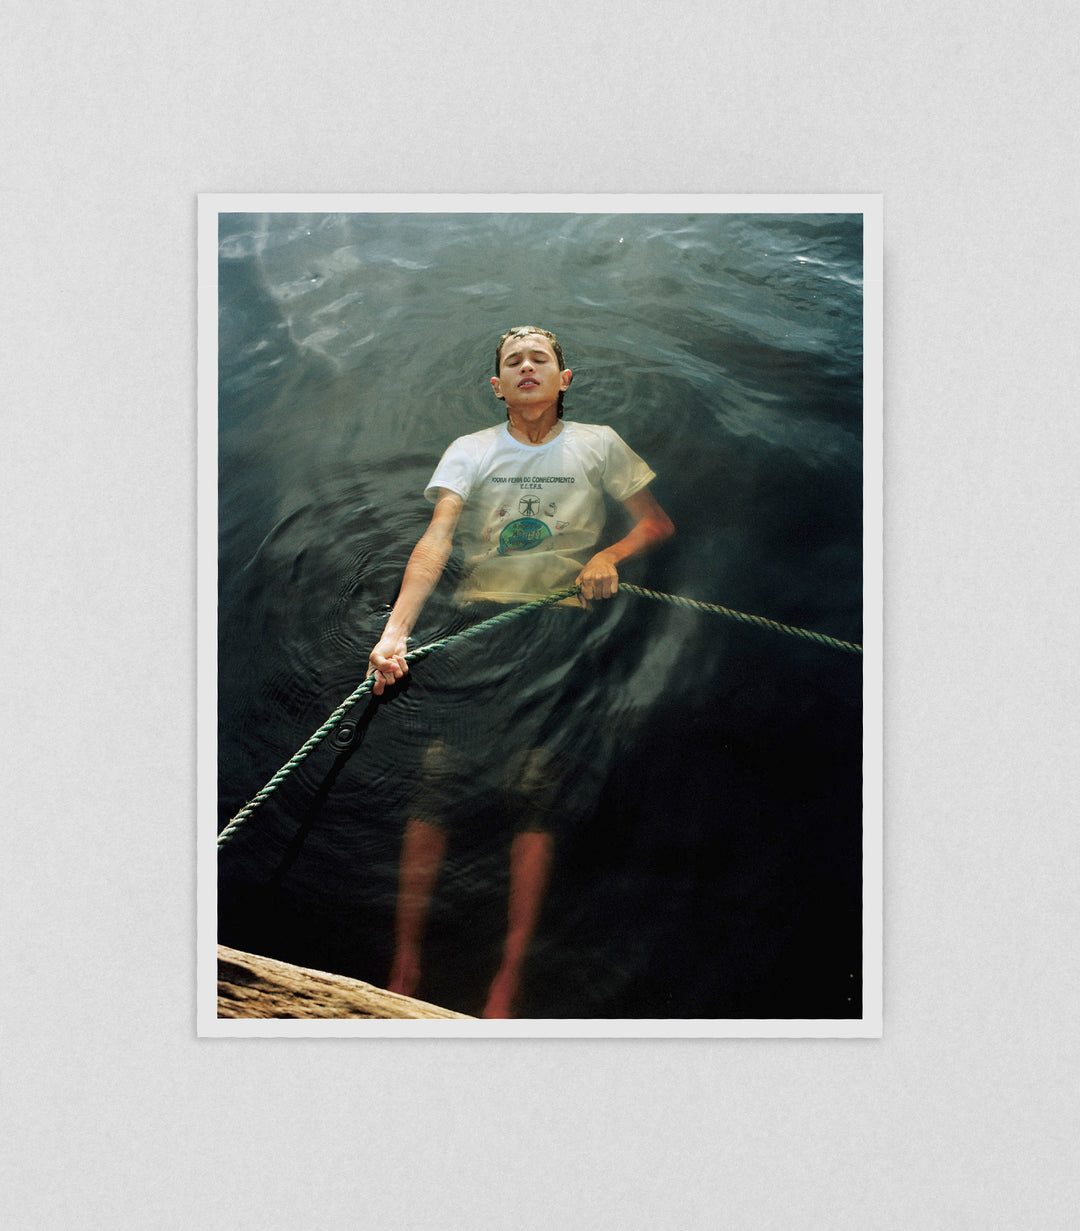 Daniel Jack Lyons – Like a River Print Edition